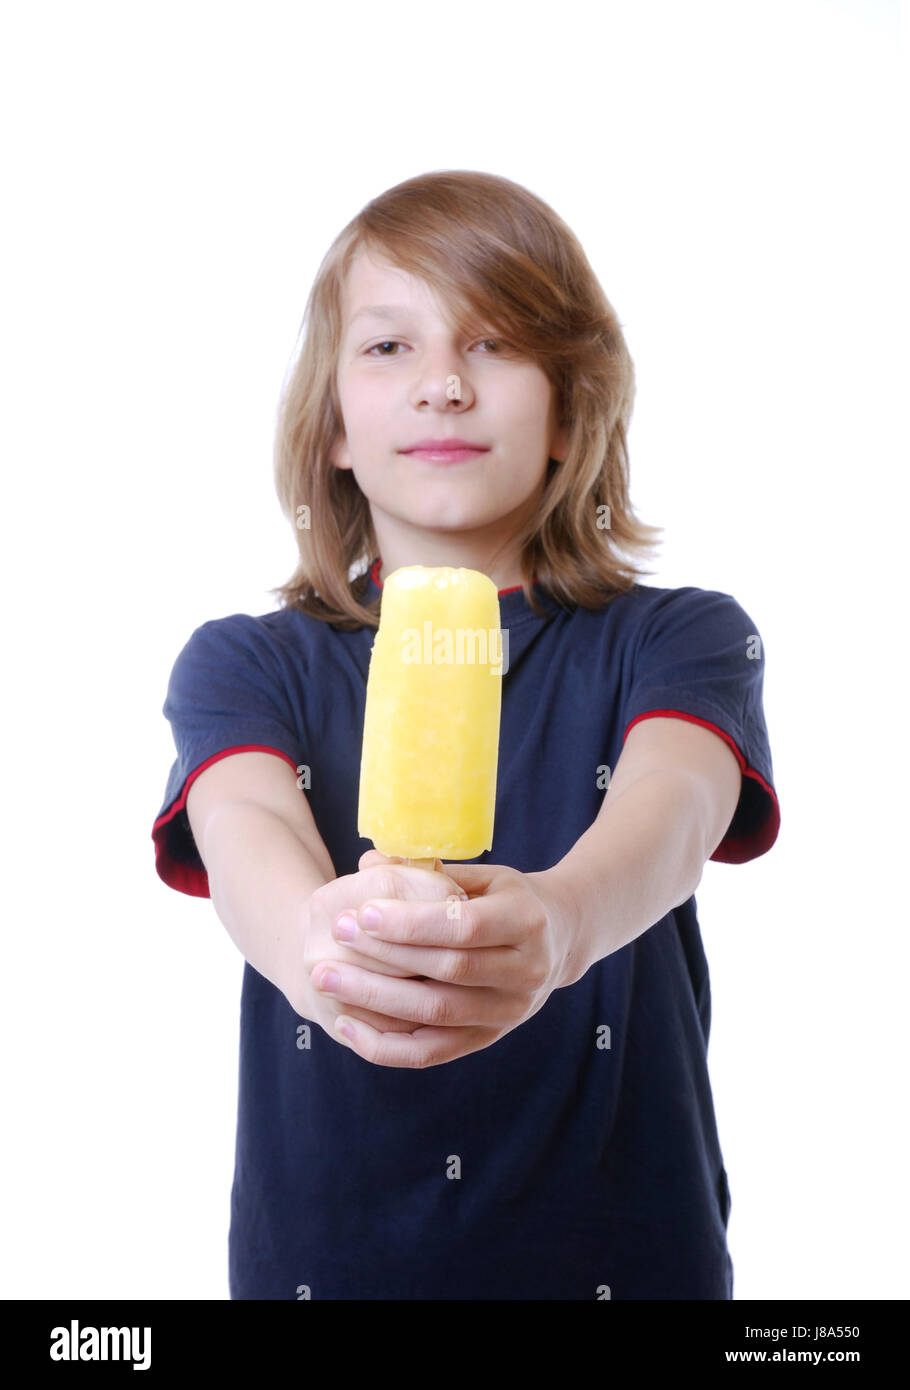 Eis Eis Eis Dessert Jung Junge Kind Eis Am Stiel Stockfotografie Alamy 